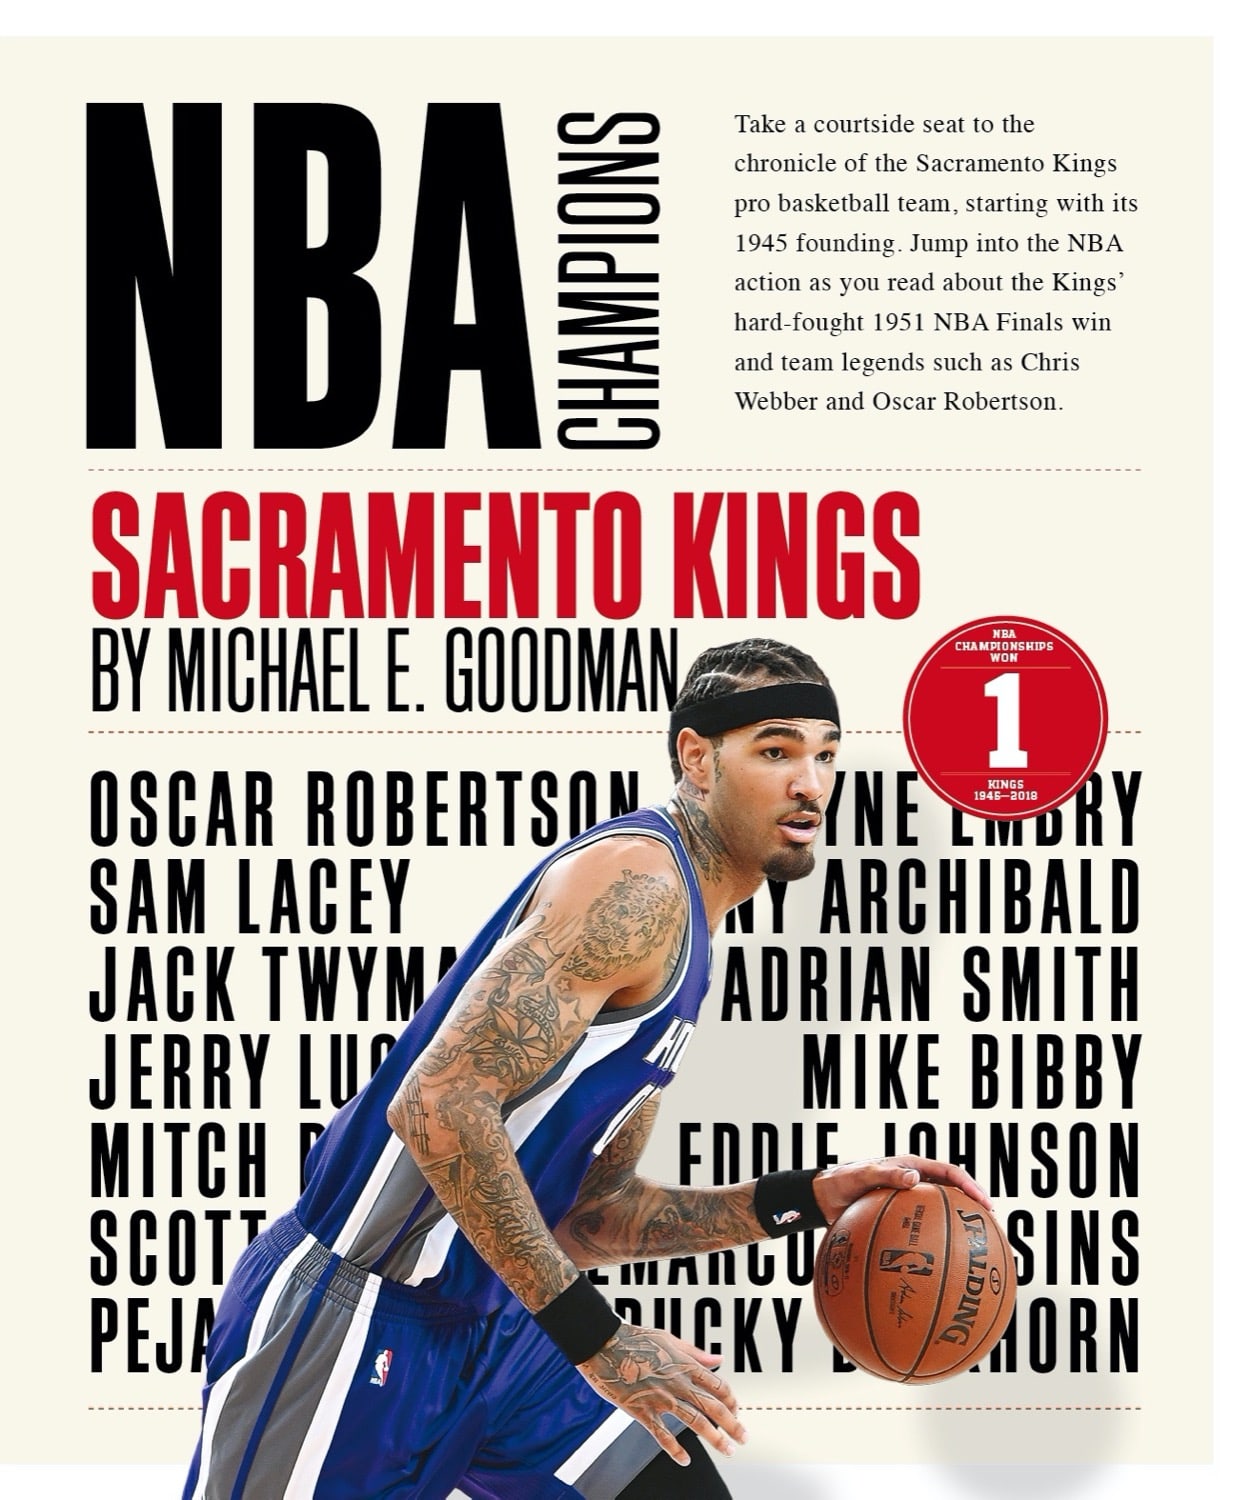 Sacramento Kings NBA awards: All the winners in team history